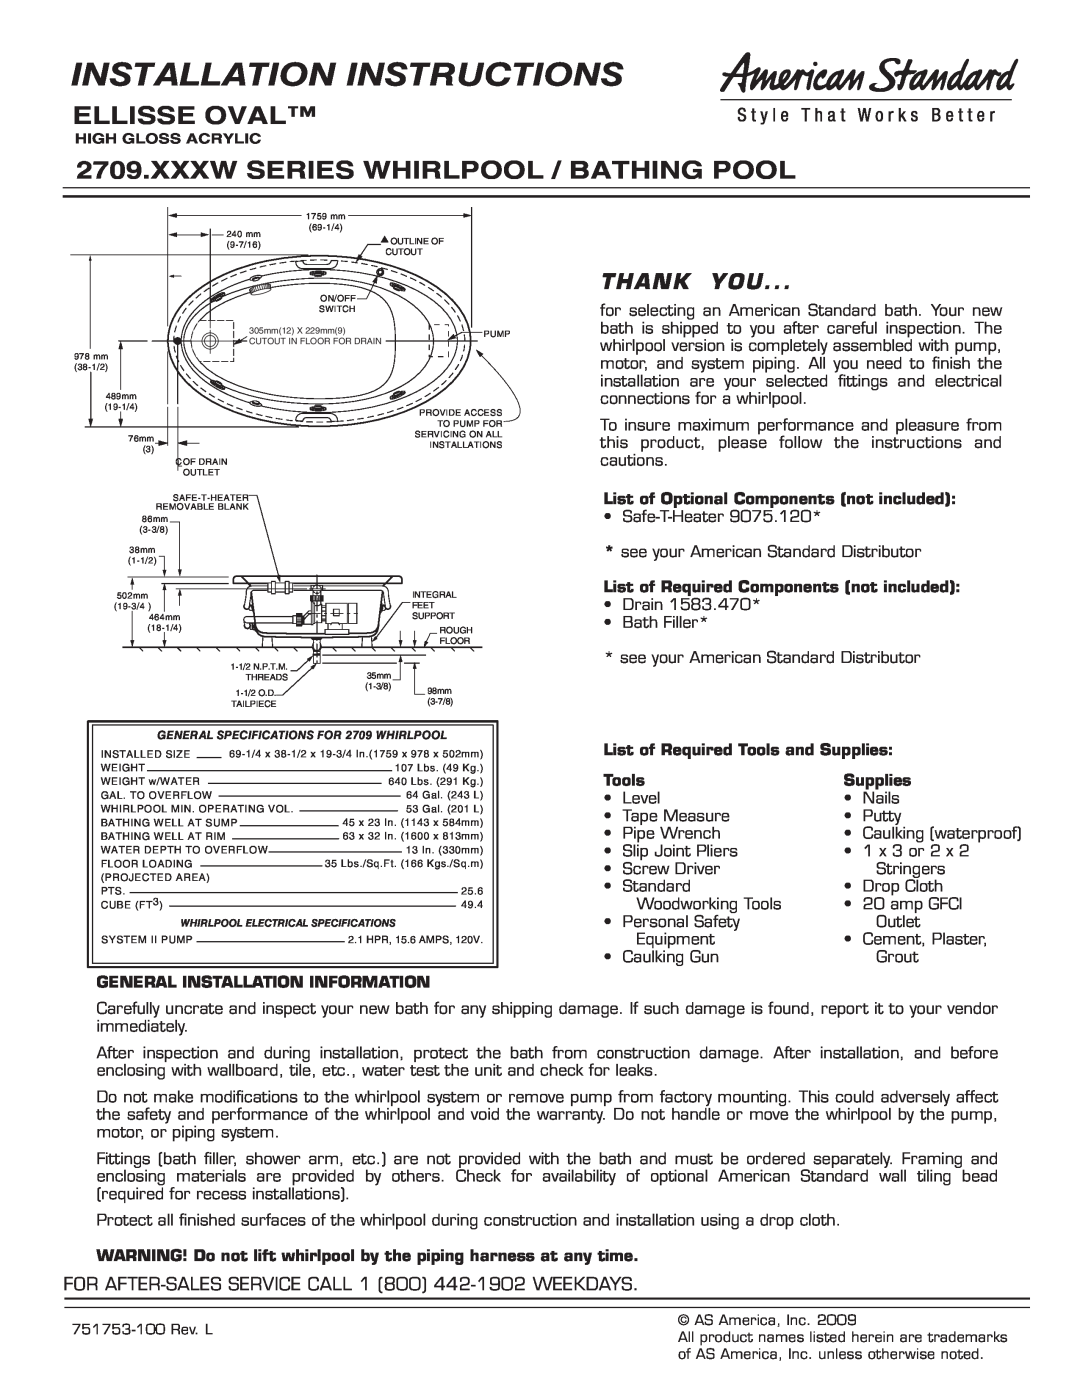 American Standard 2709 installation instructions Installation Instructions, Ellisse Oval, Thank You, Tools, Supplies 